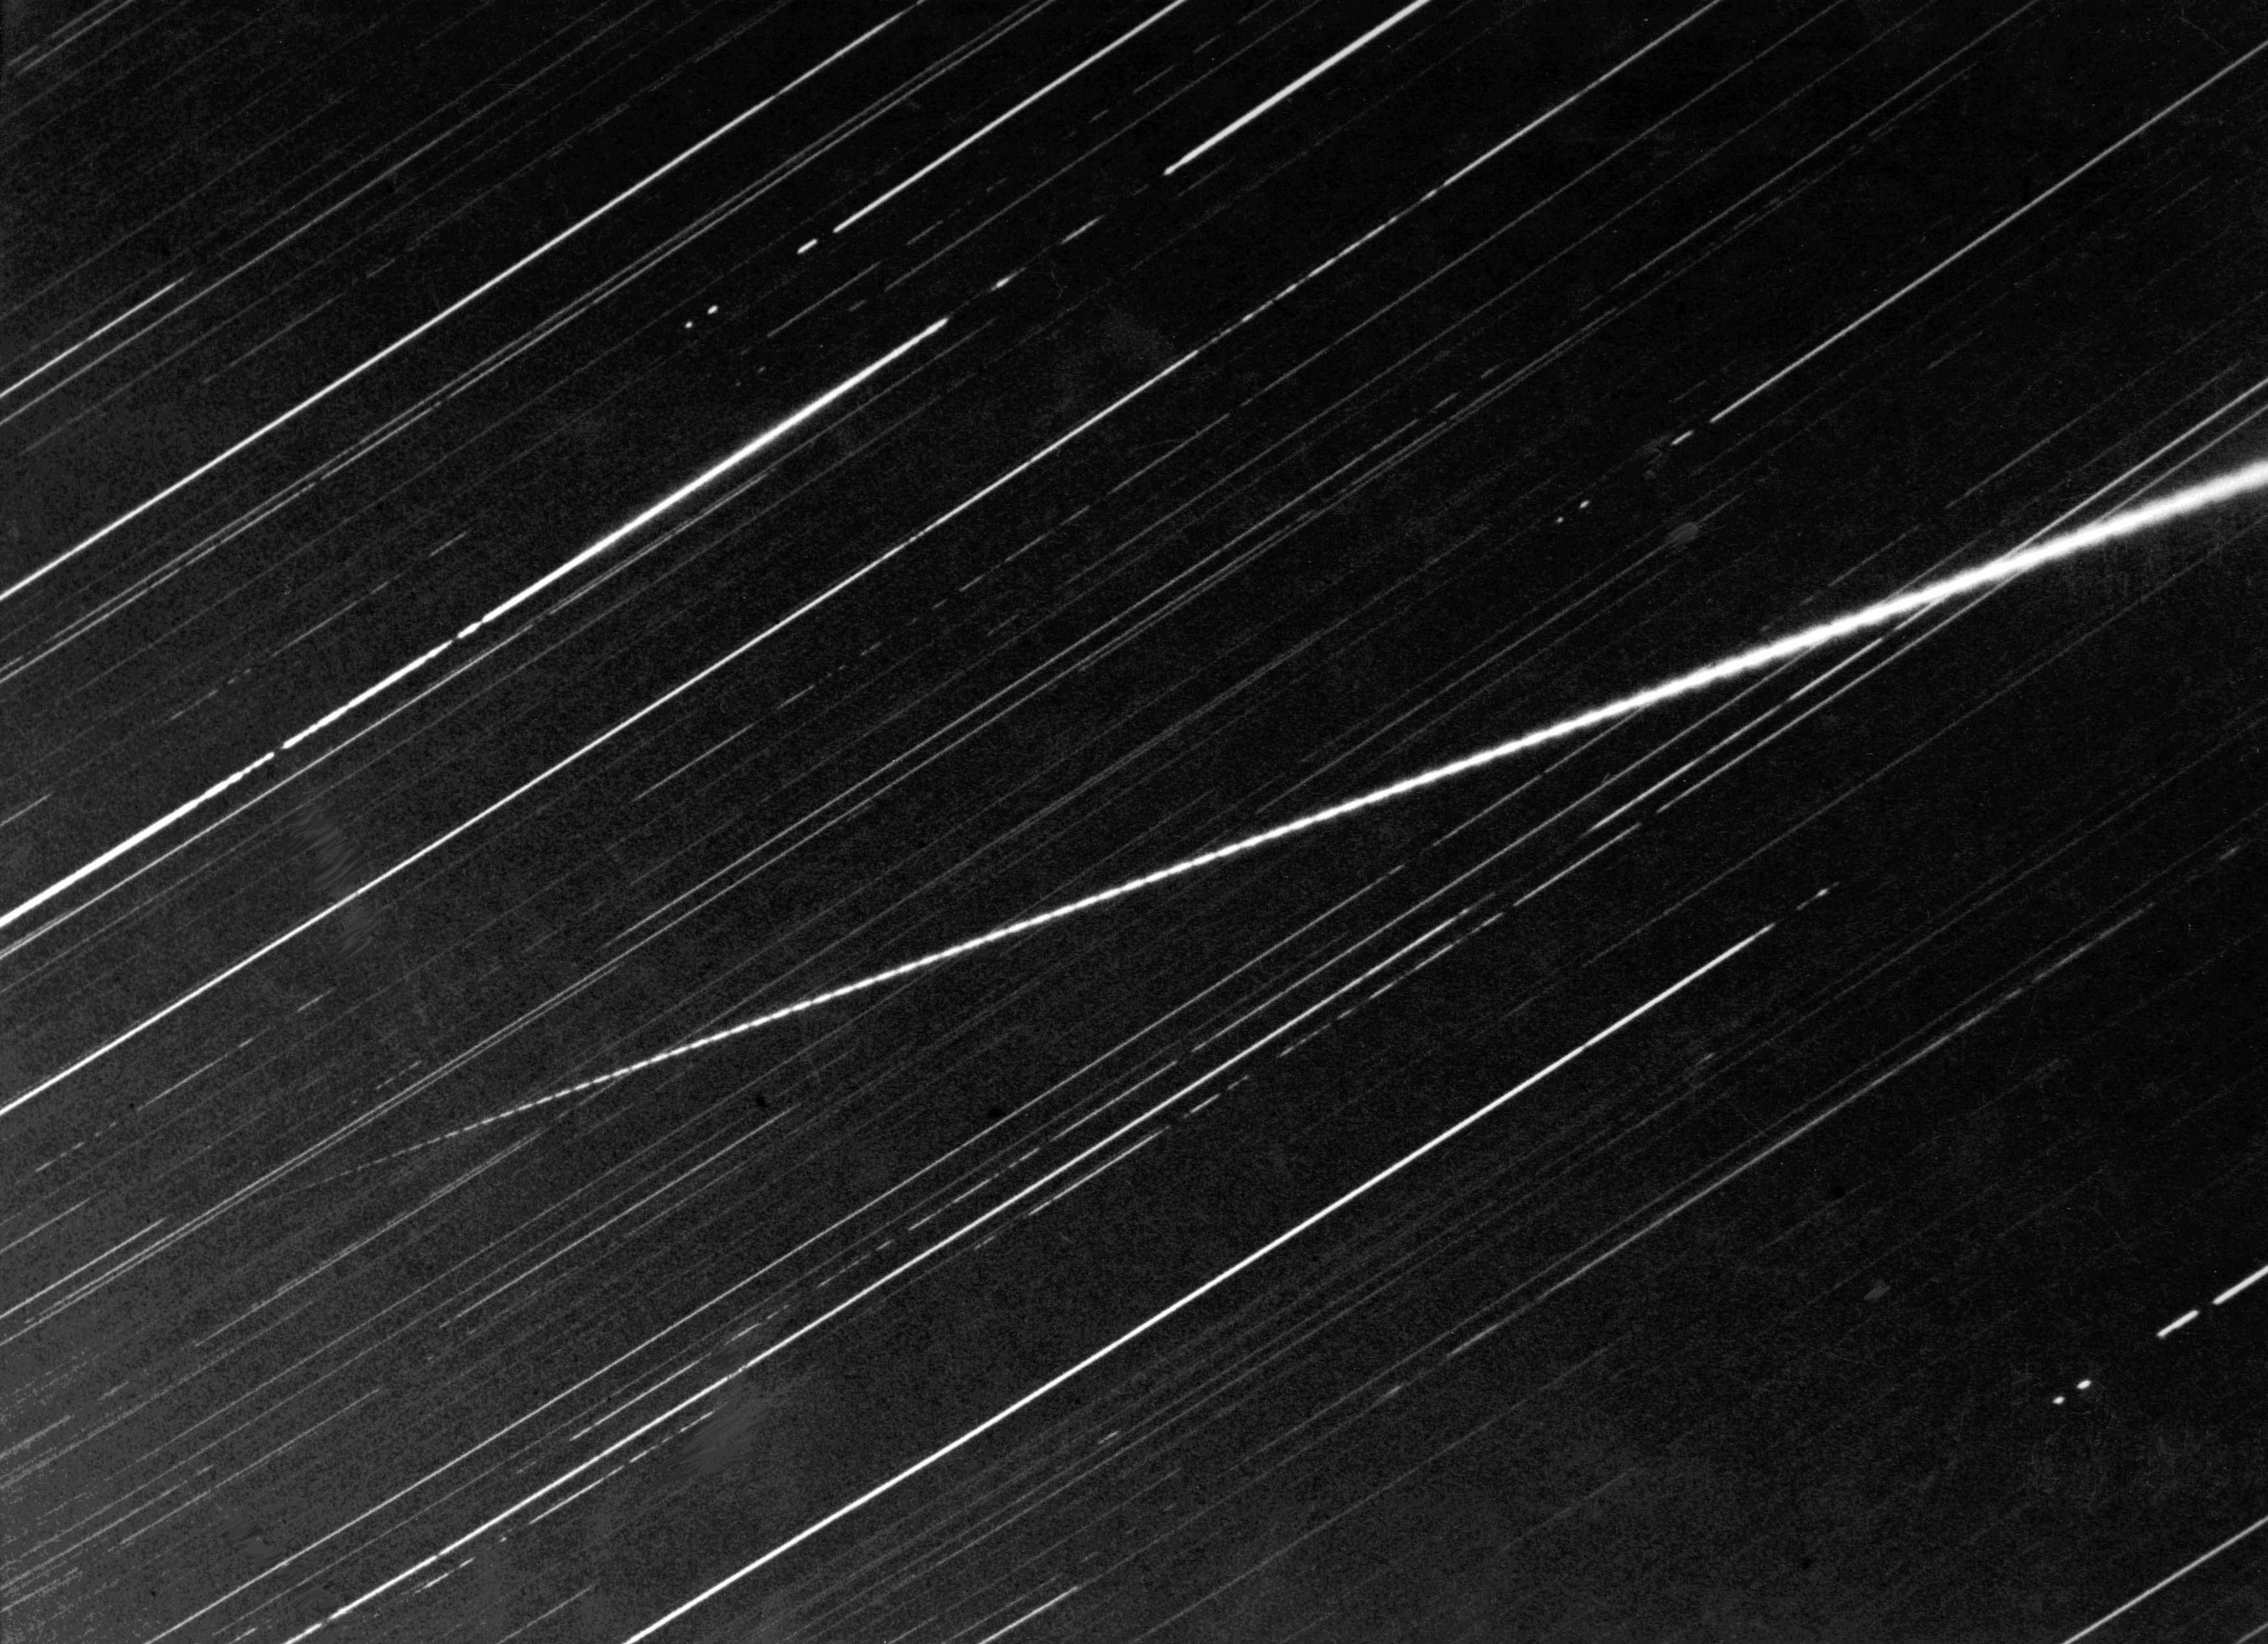 Bolid Příbram ze 7. dubna 1959 vedl k nálezuprvnich meteoritu s r odokmenem na světě